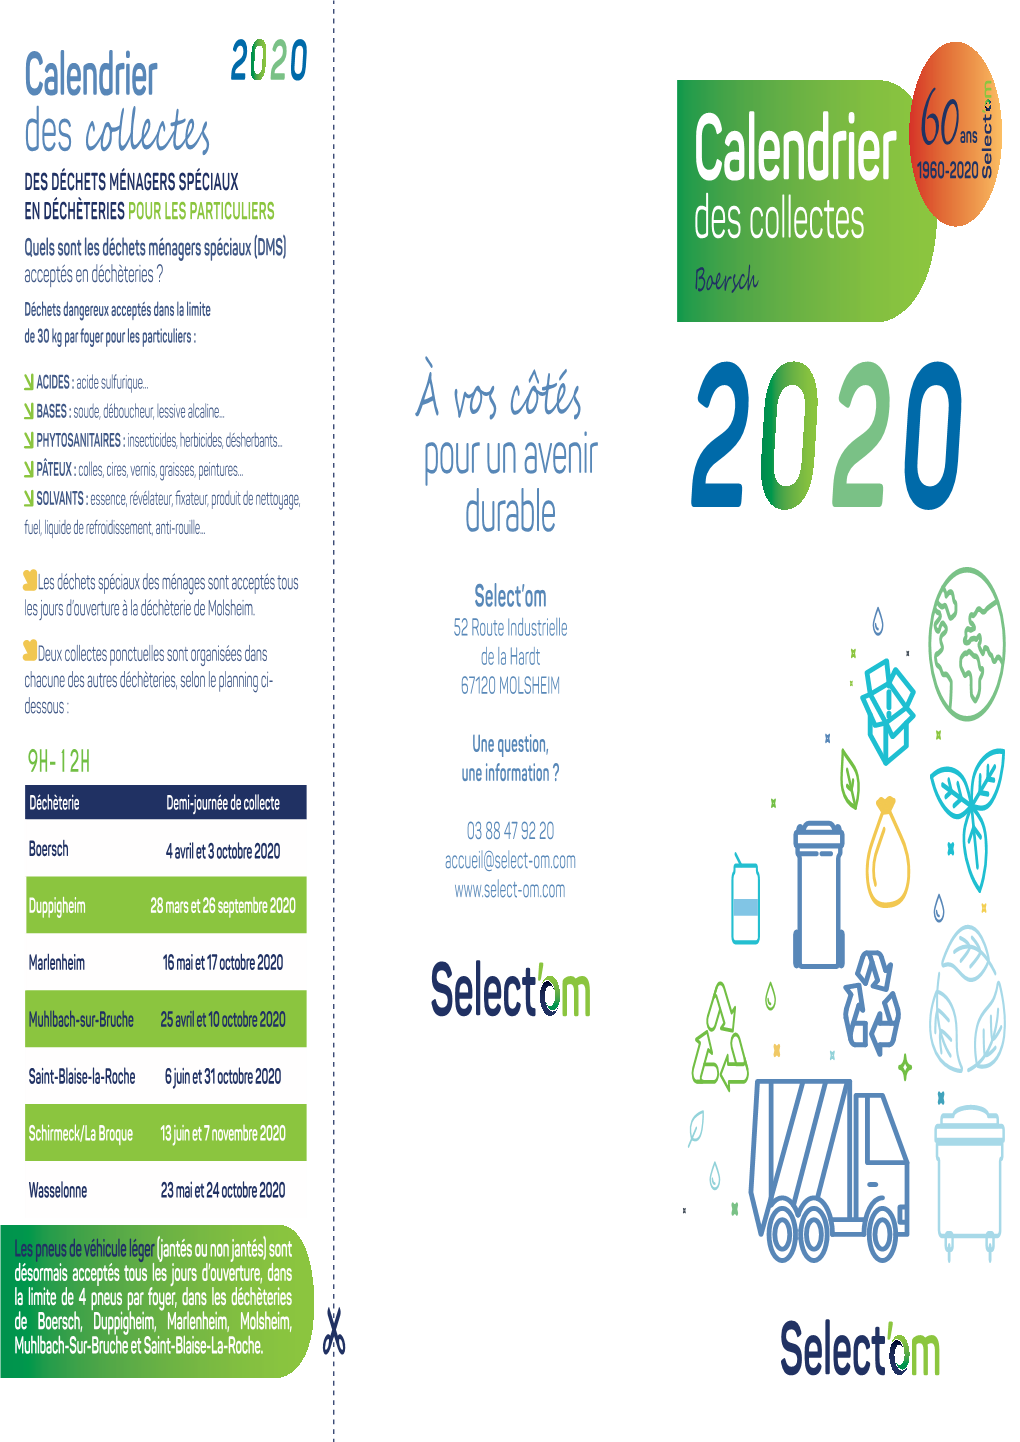 Calendrier Des Collectes Boersch 2020